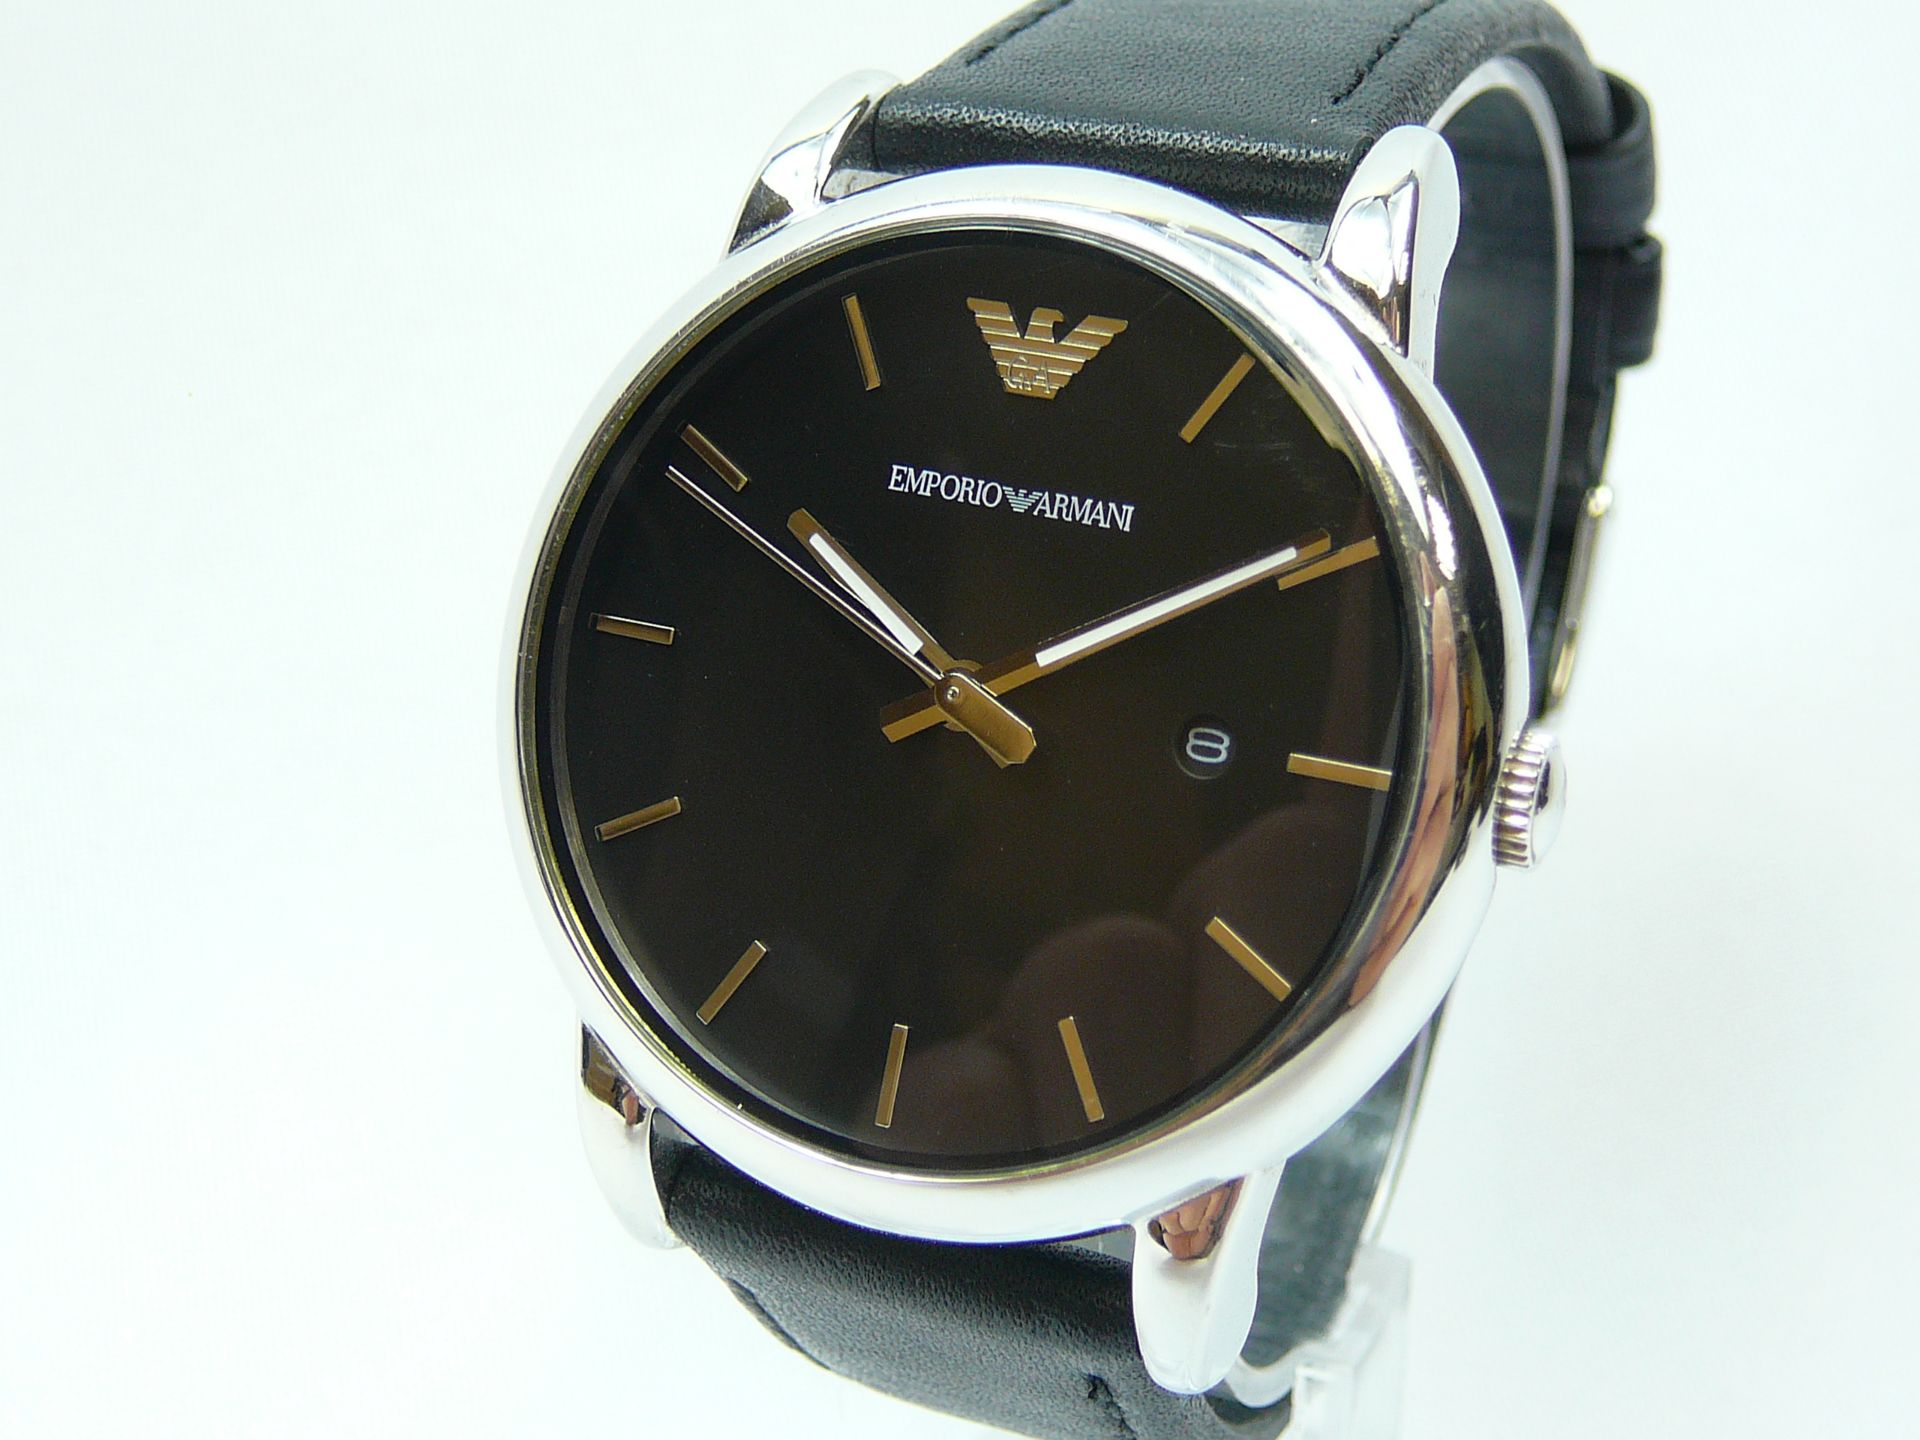 Gents Emporio Armani Wrist Watch - Image 2 of 3